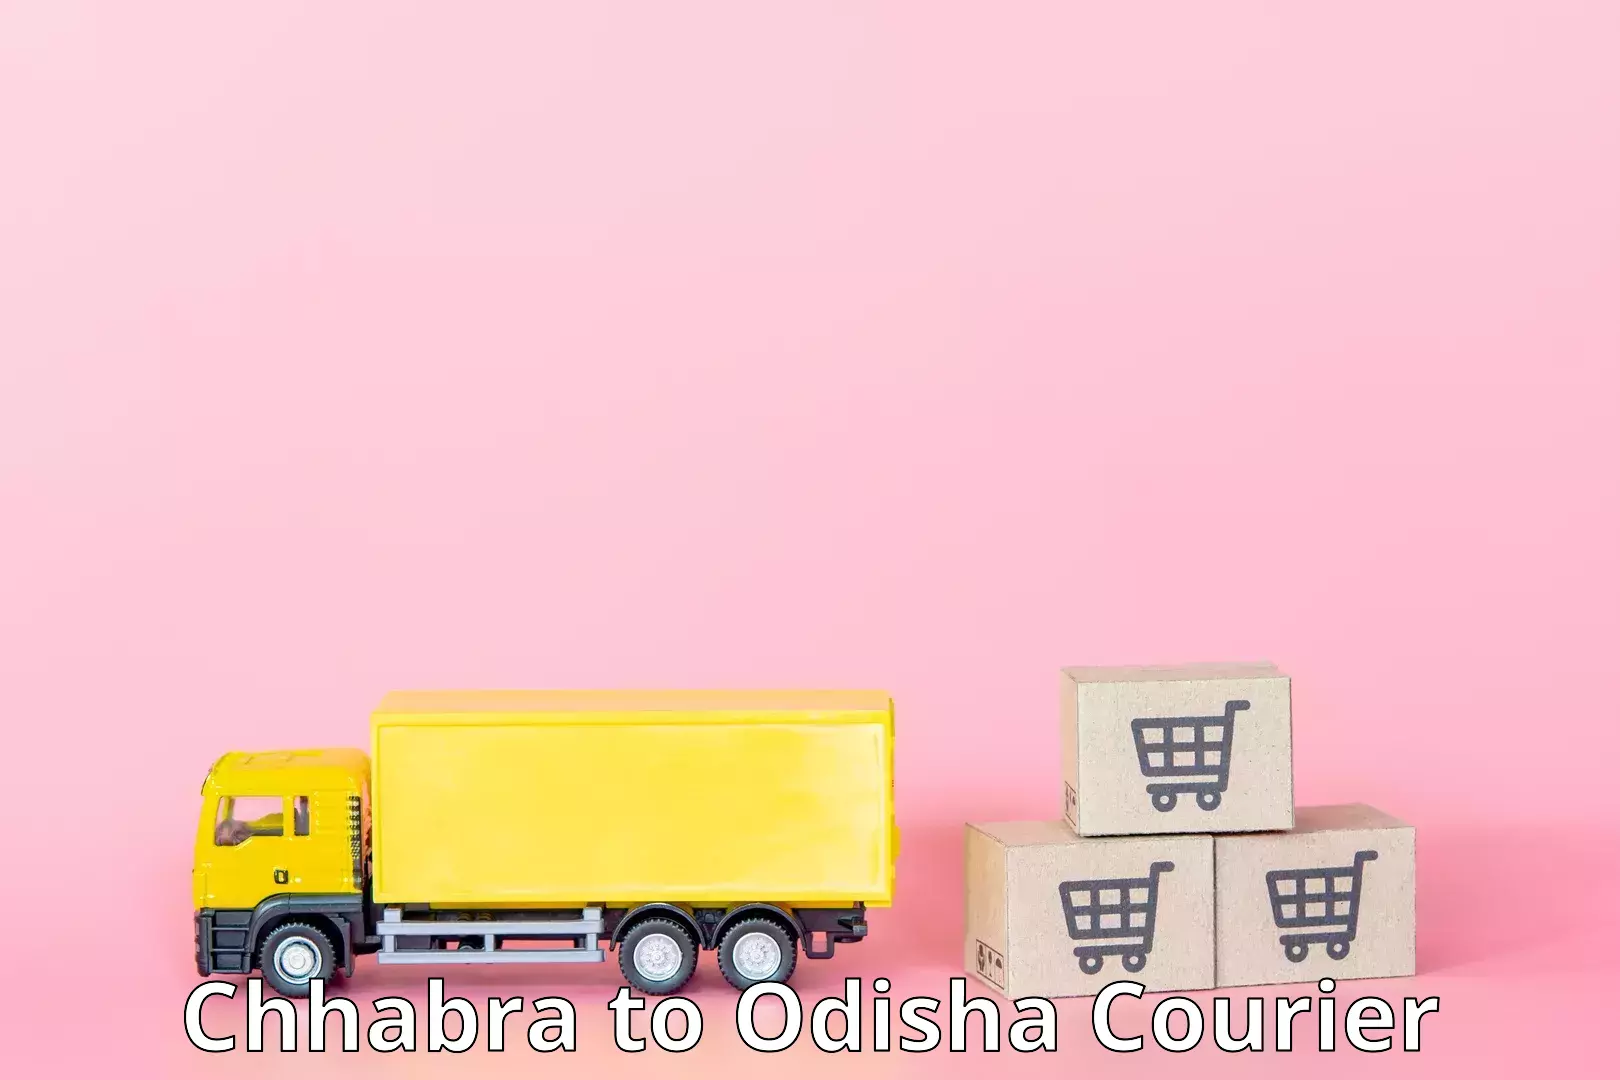 Comprehensive delivery network Chhabra to Jharsuguda